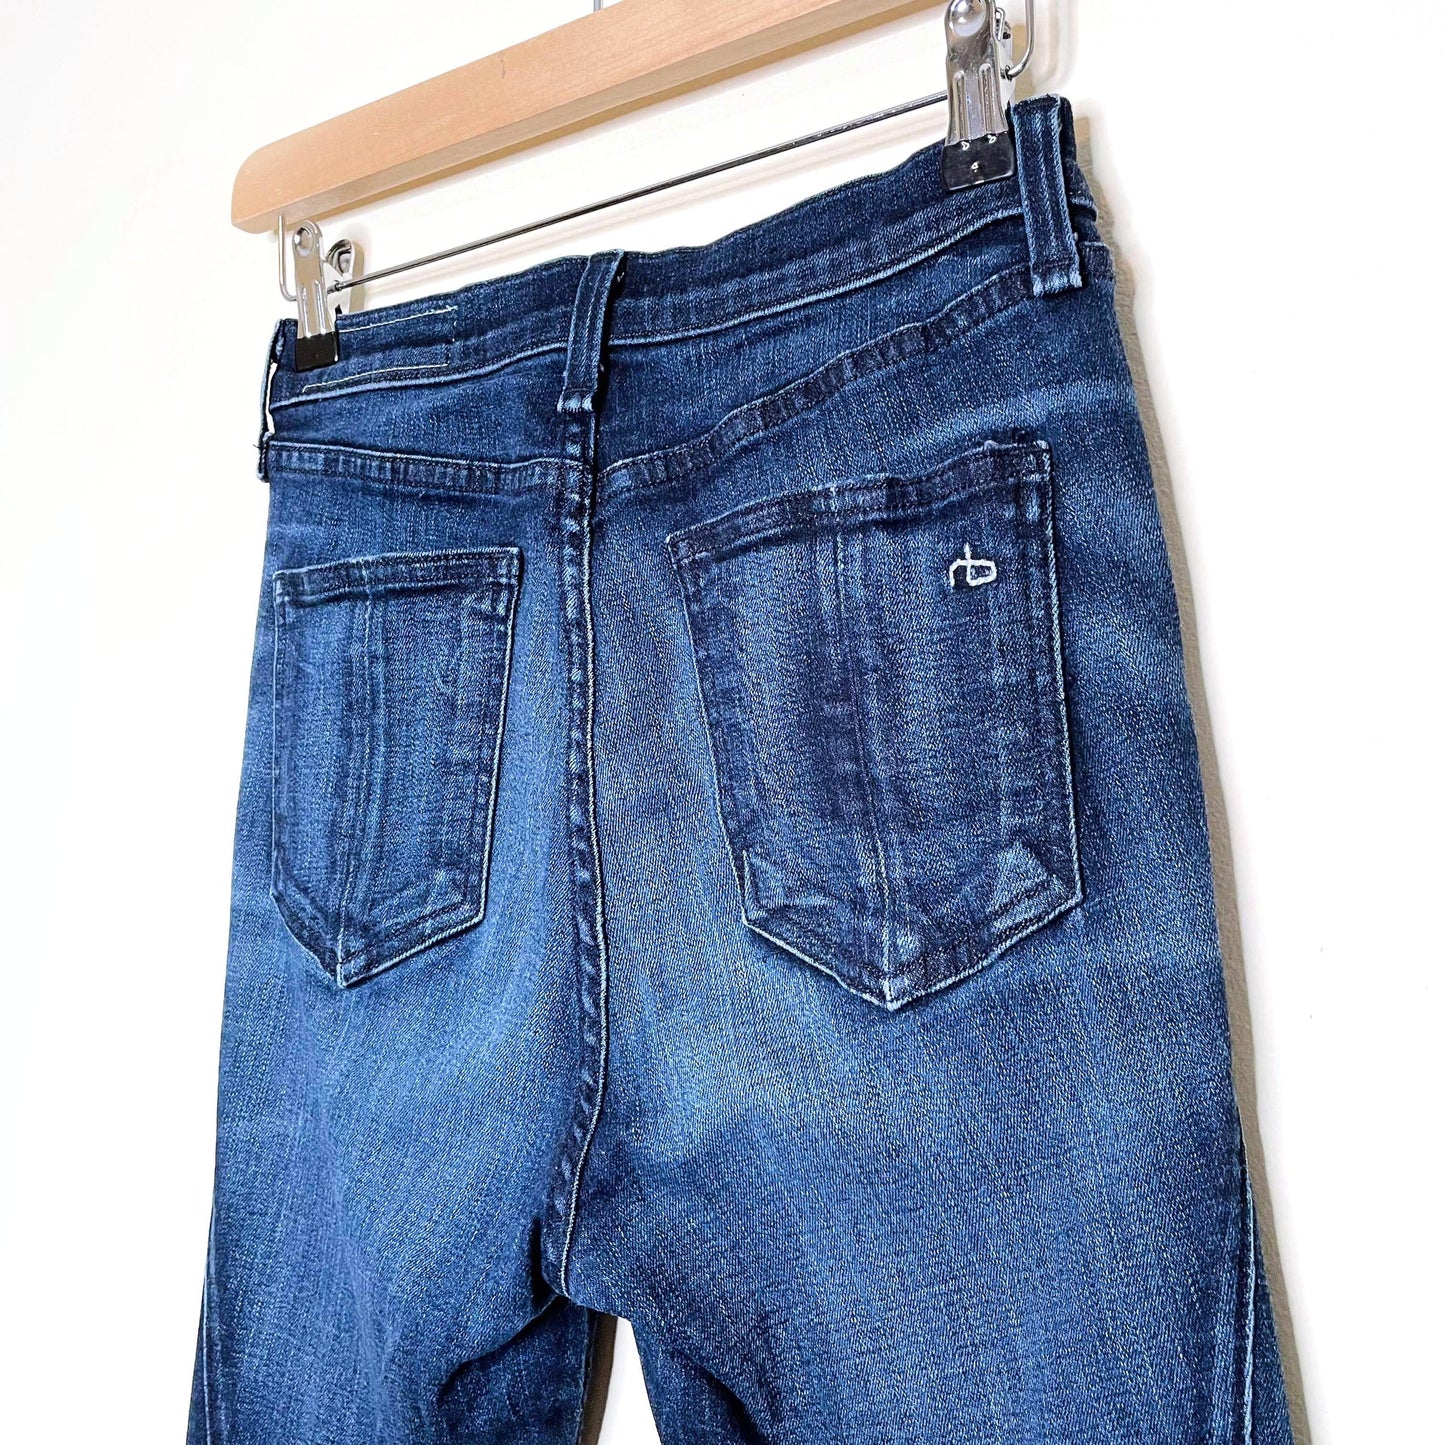 rag & bone justine anfield high rise zip cuff skinny jeans - size 27